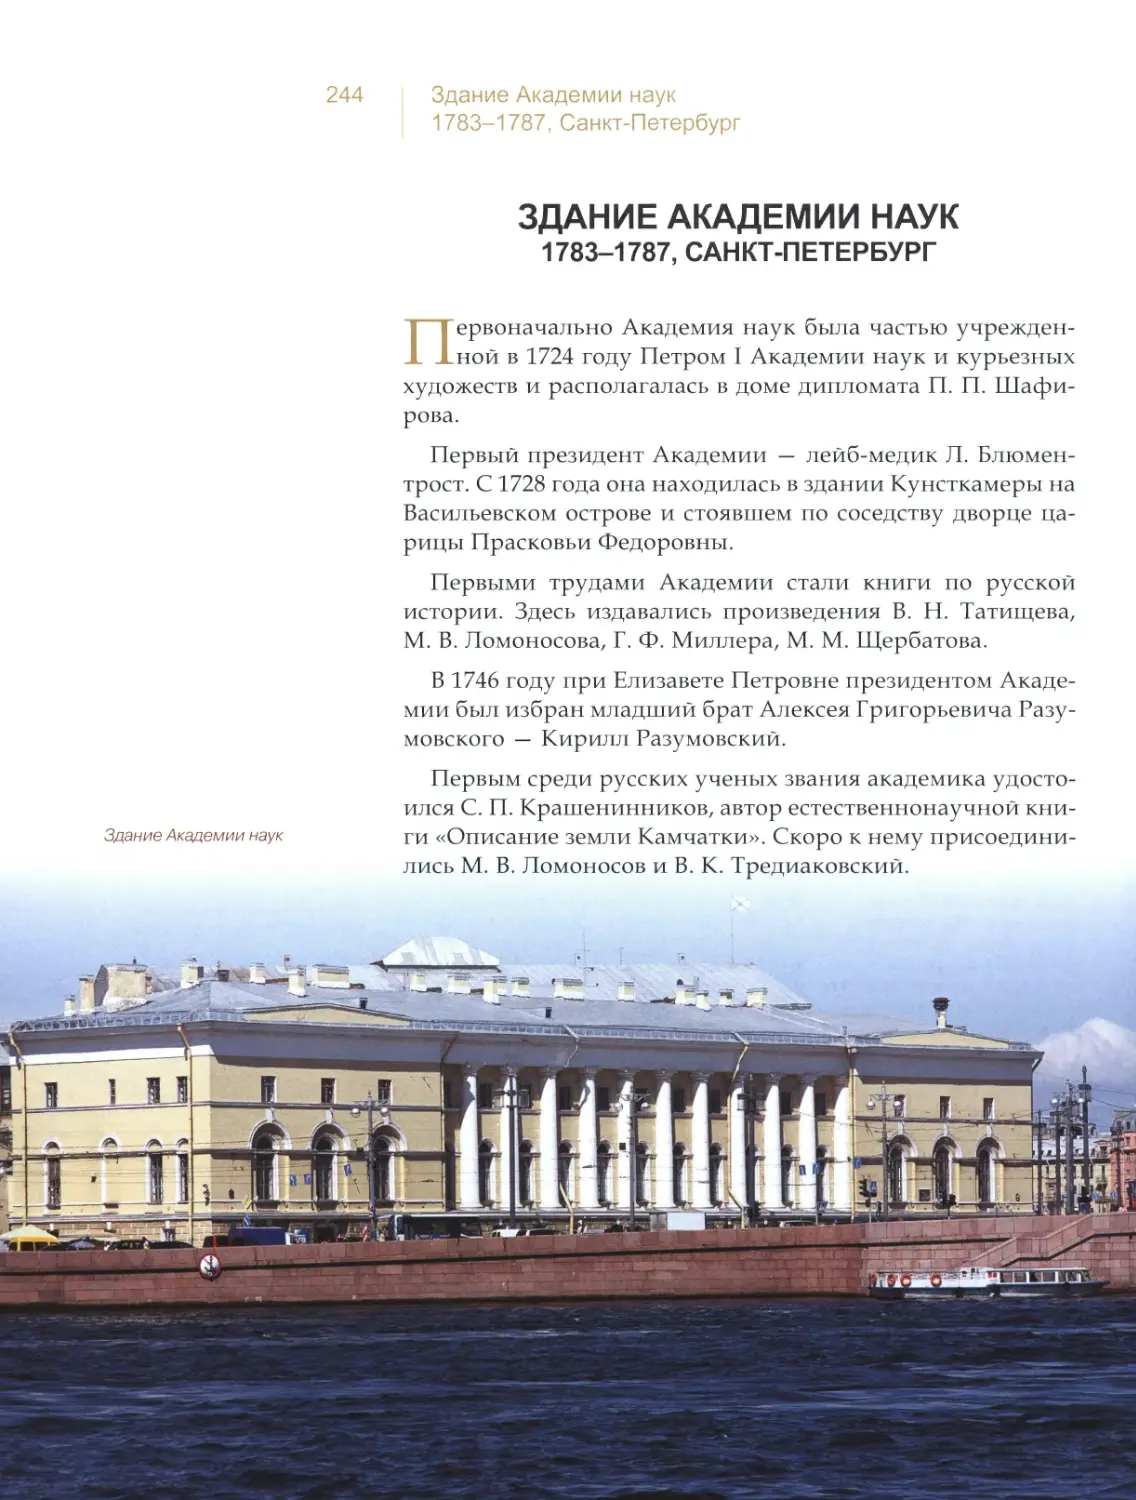 Здание Академии наук, Санкт-Петербург